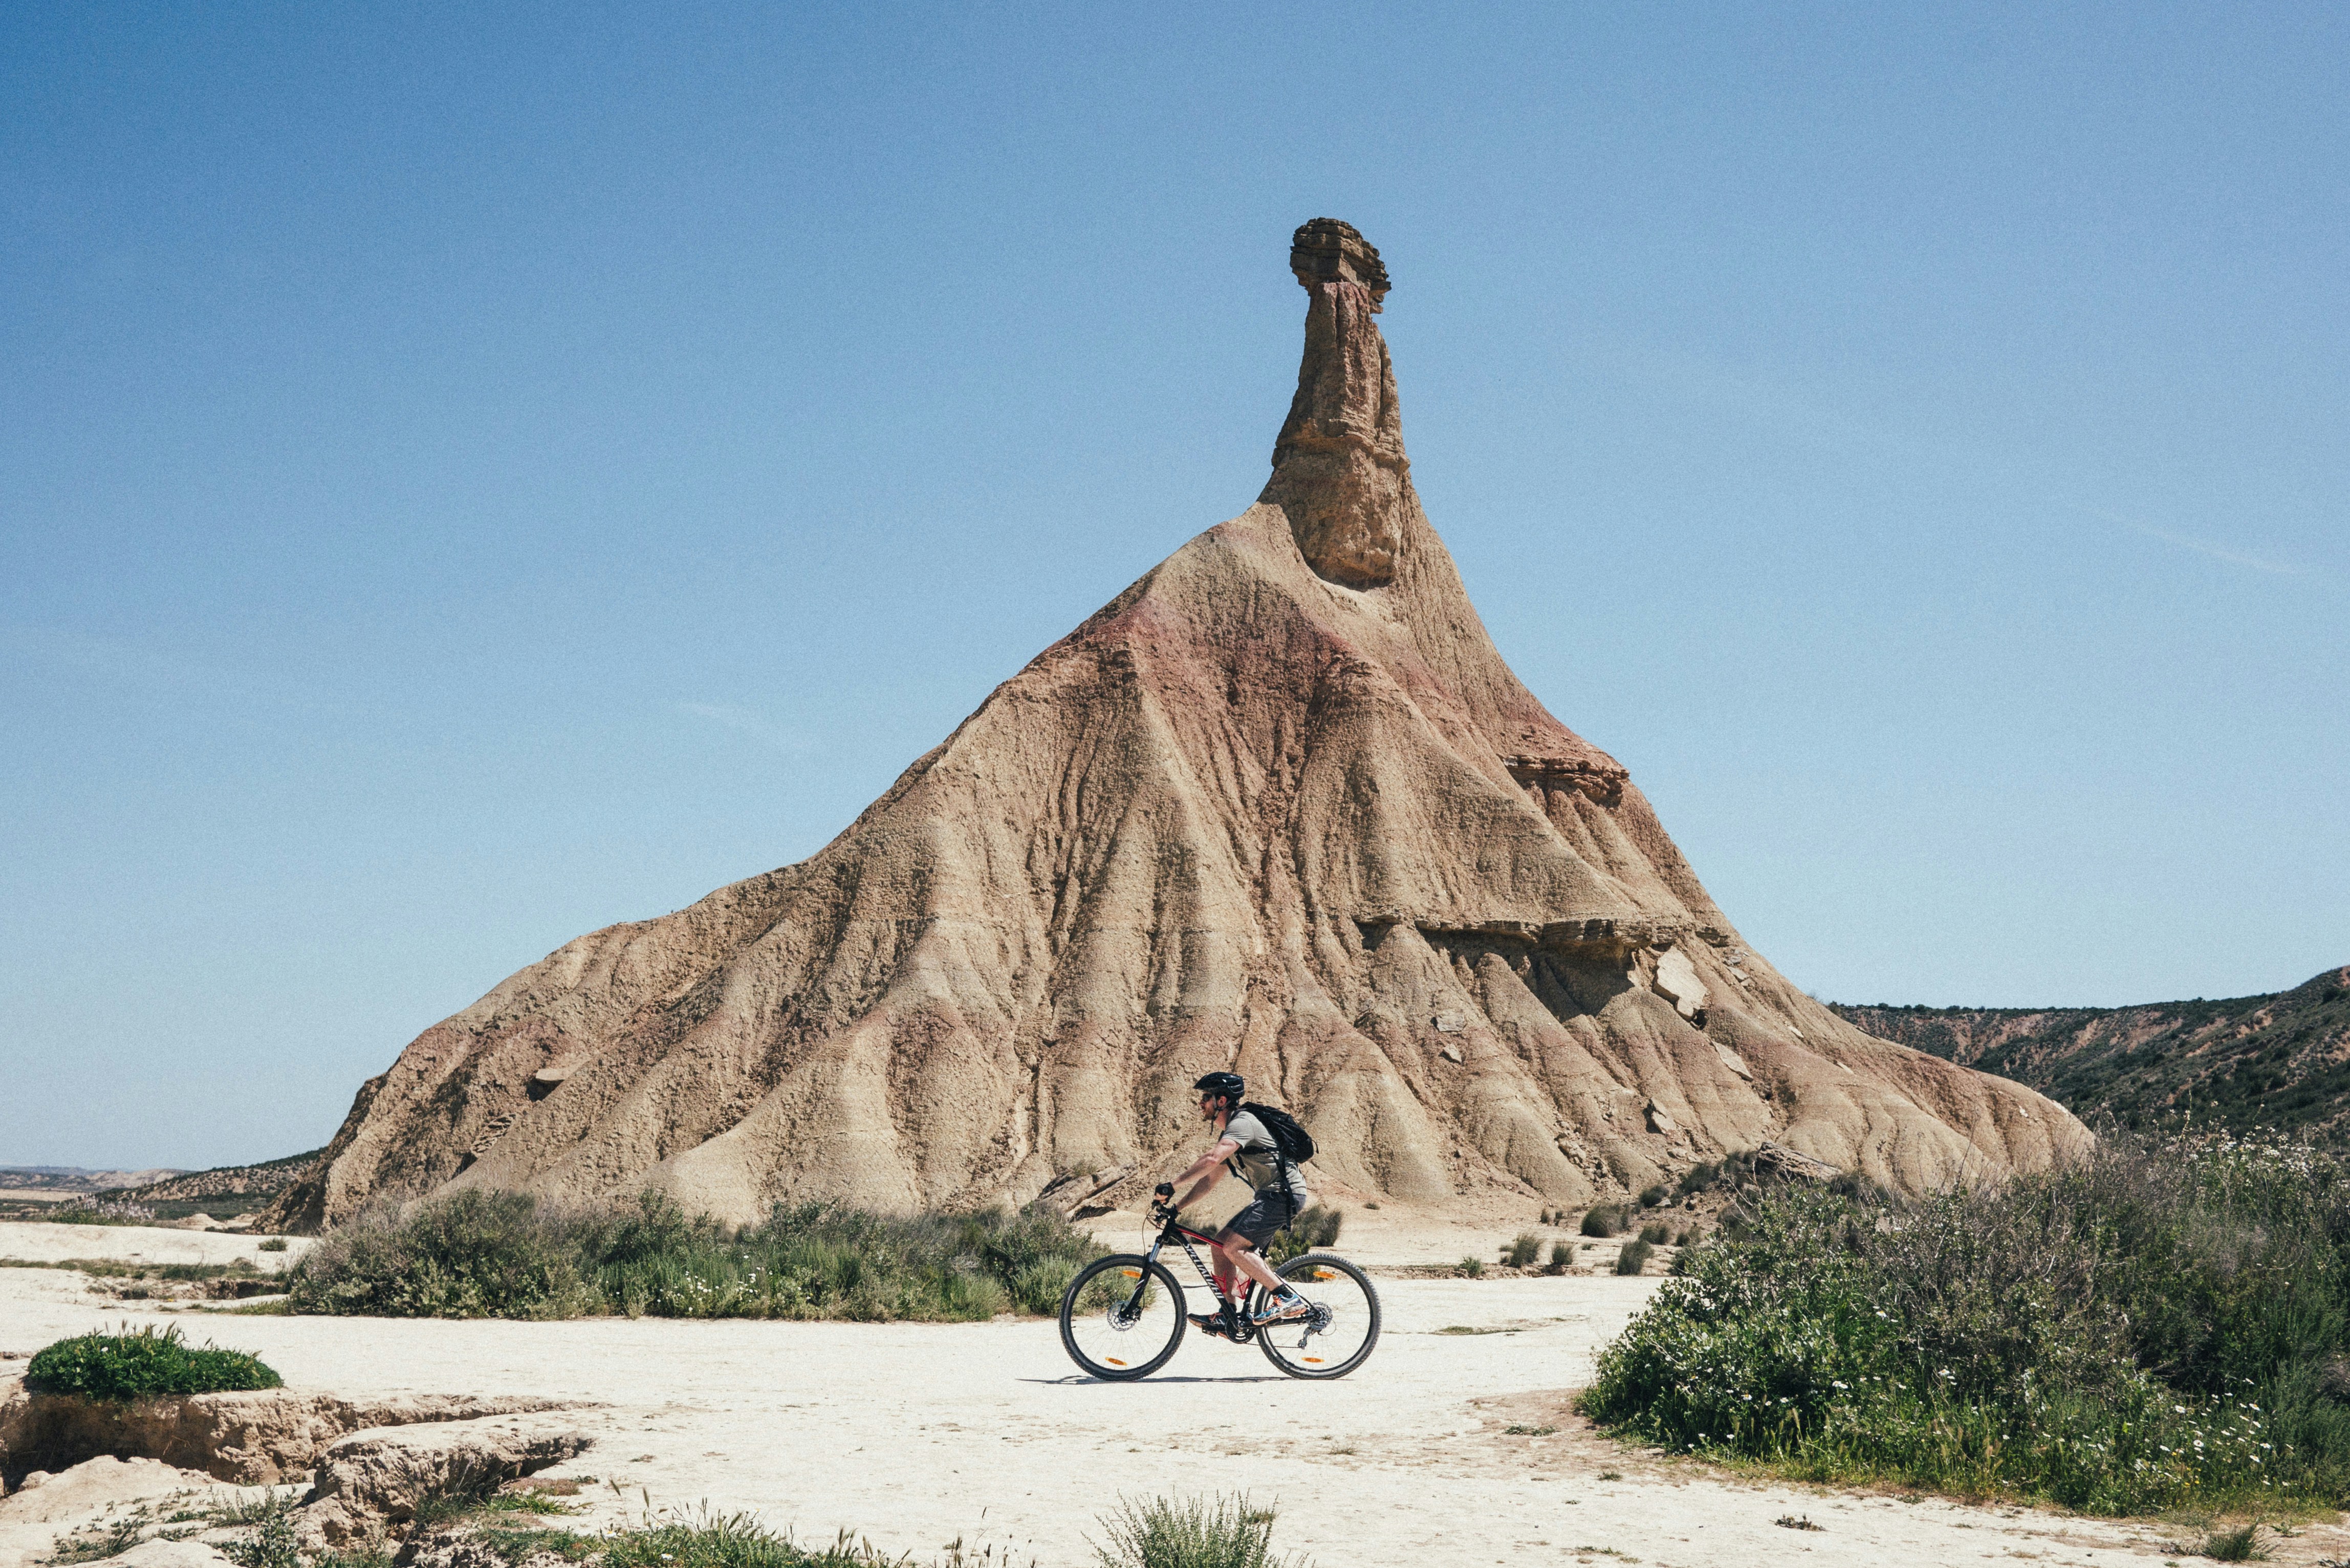 man riding bicycle near brown rock formation during daytime